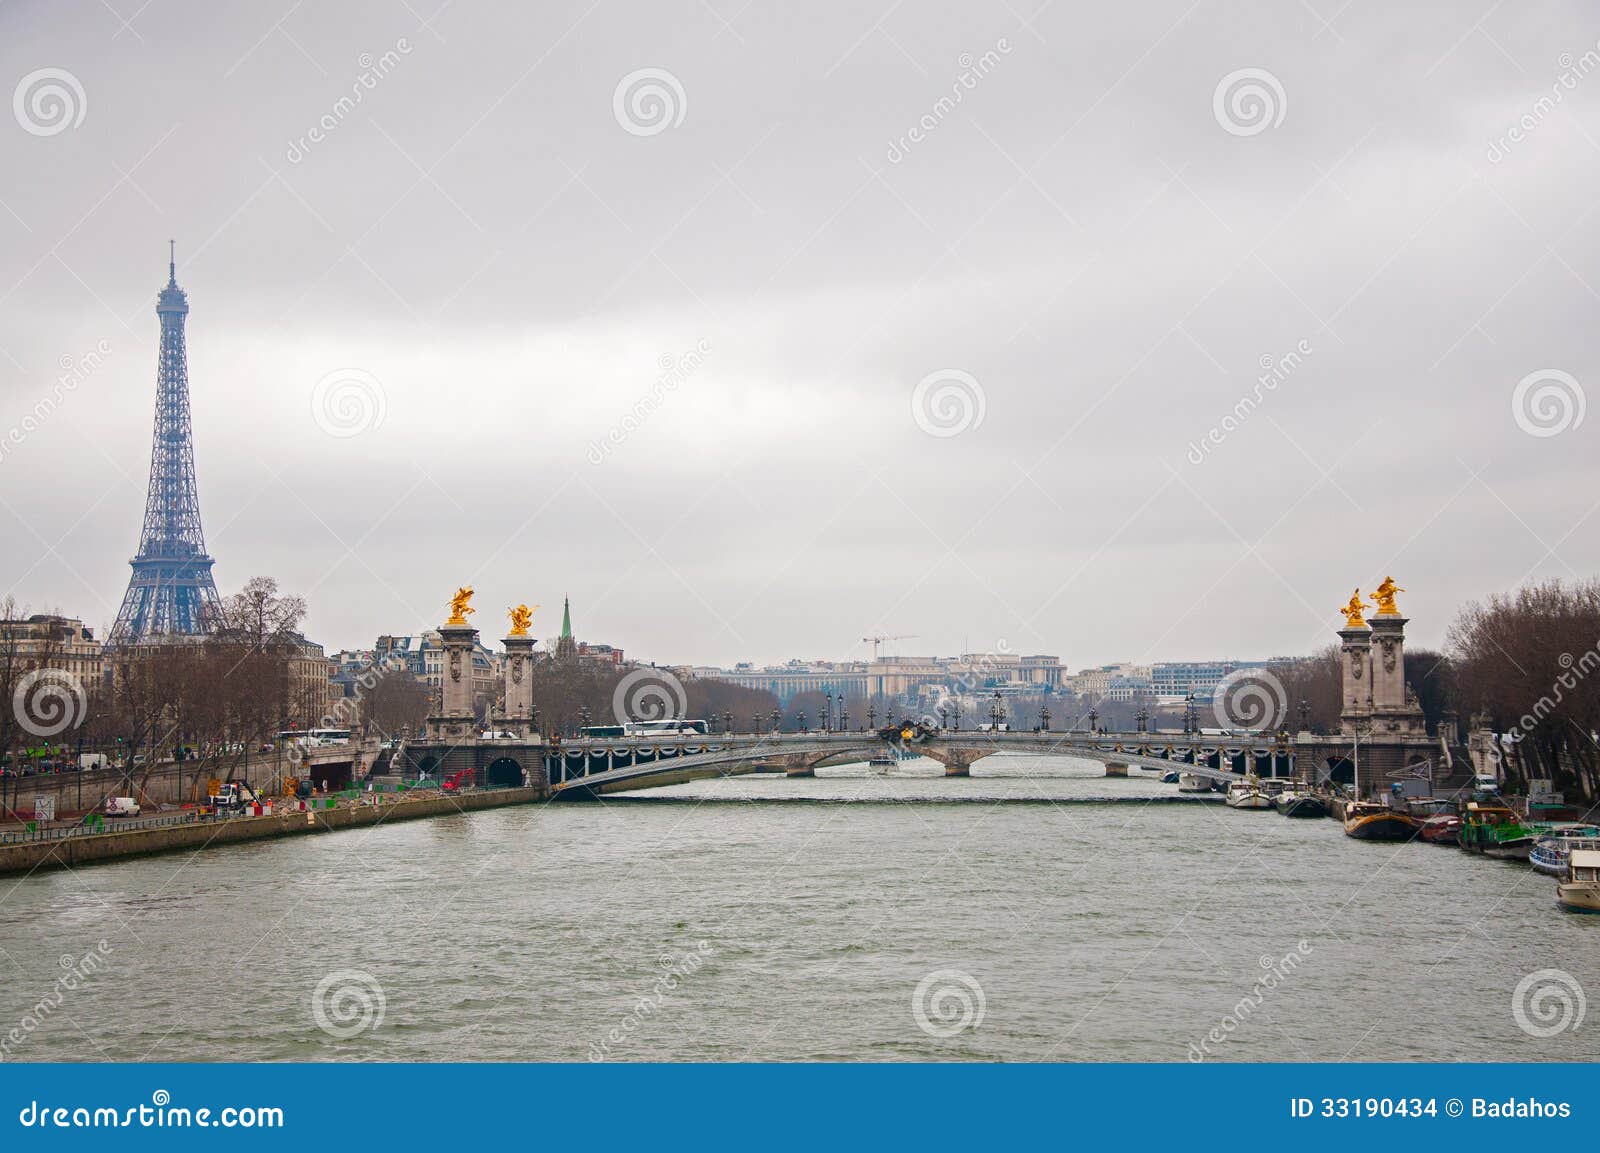 Paris stock photo. Image of famous, history, buildings - 33190434